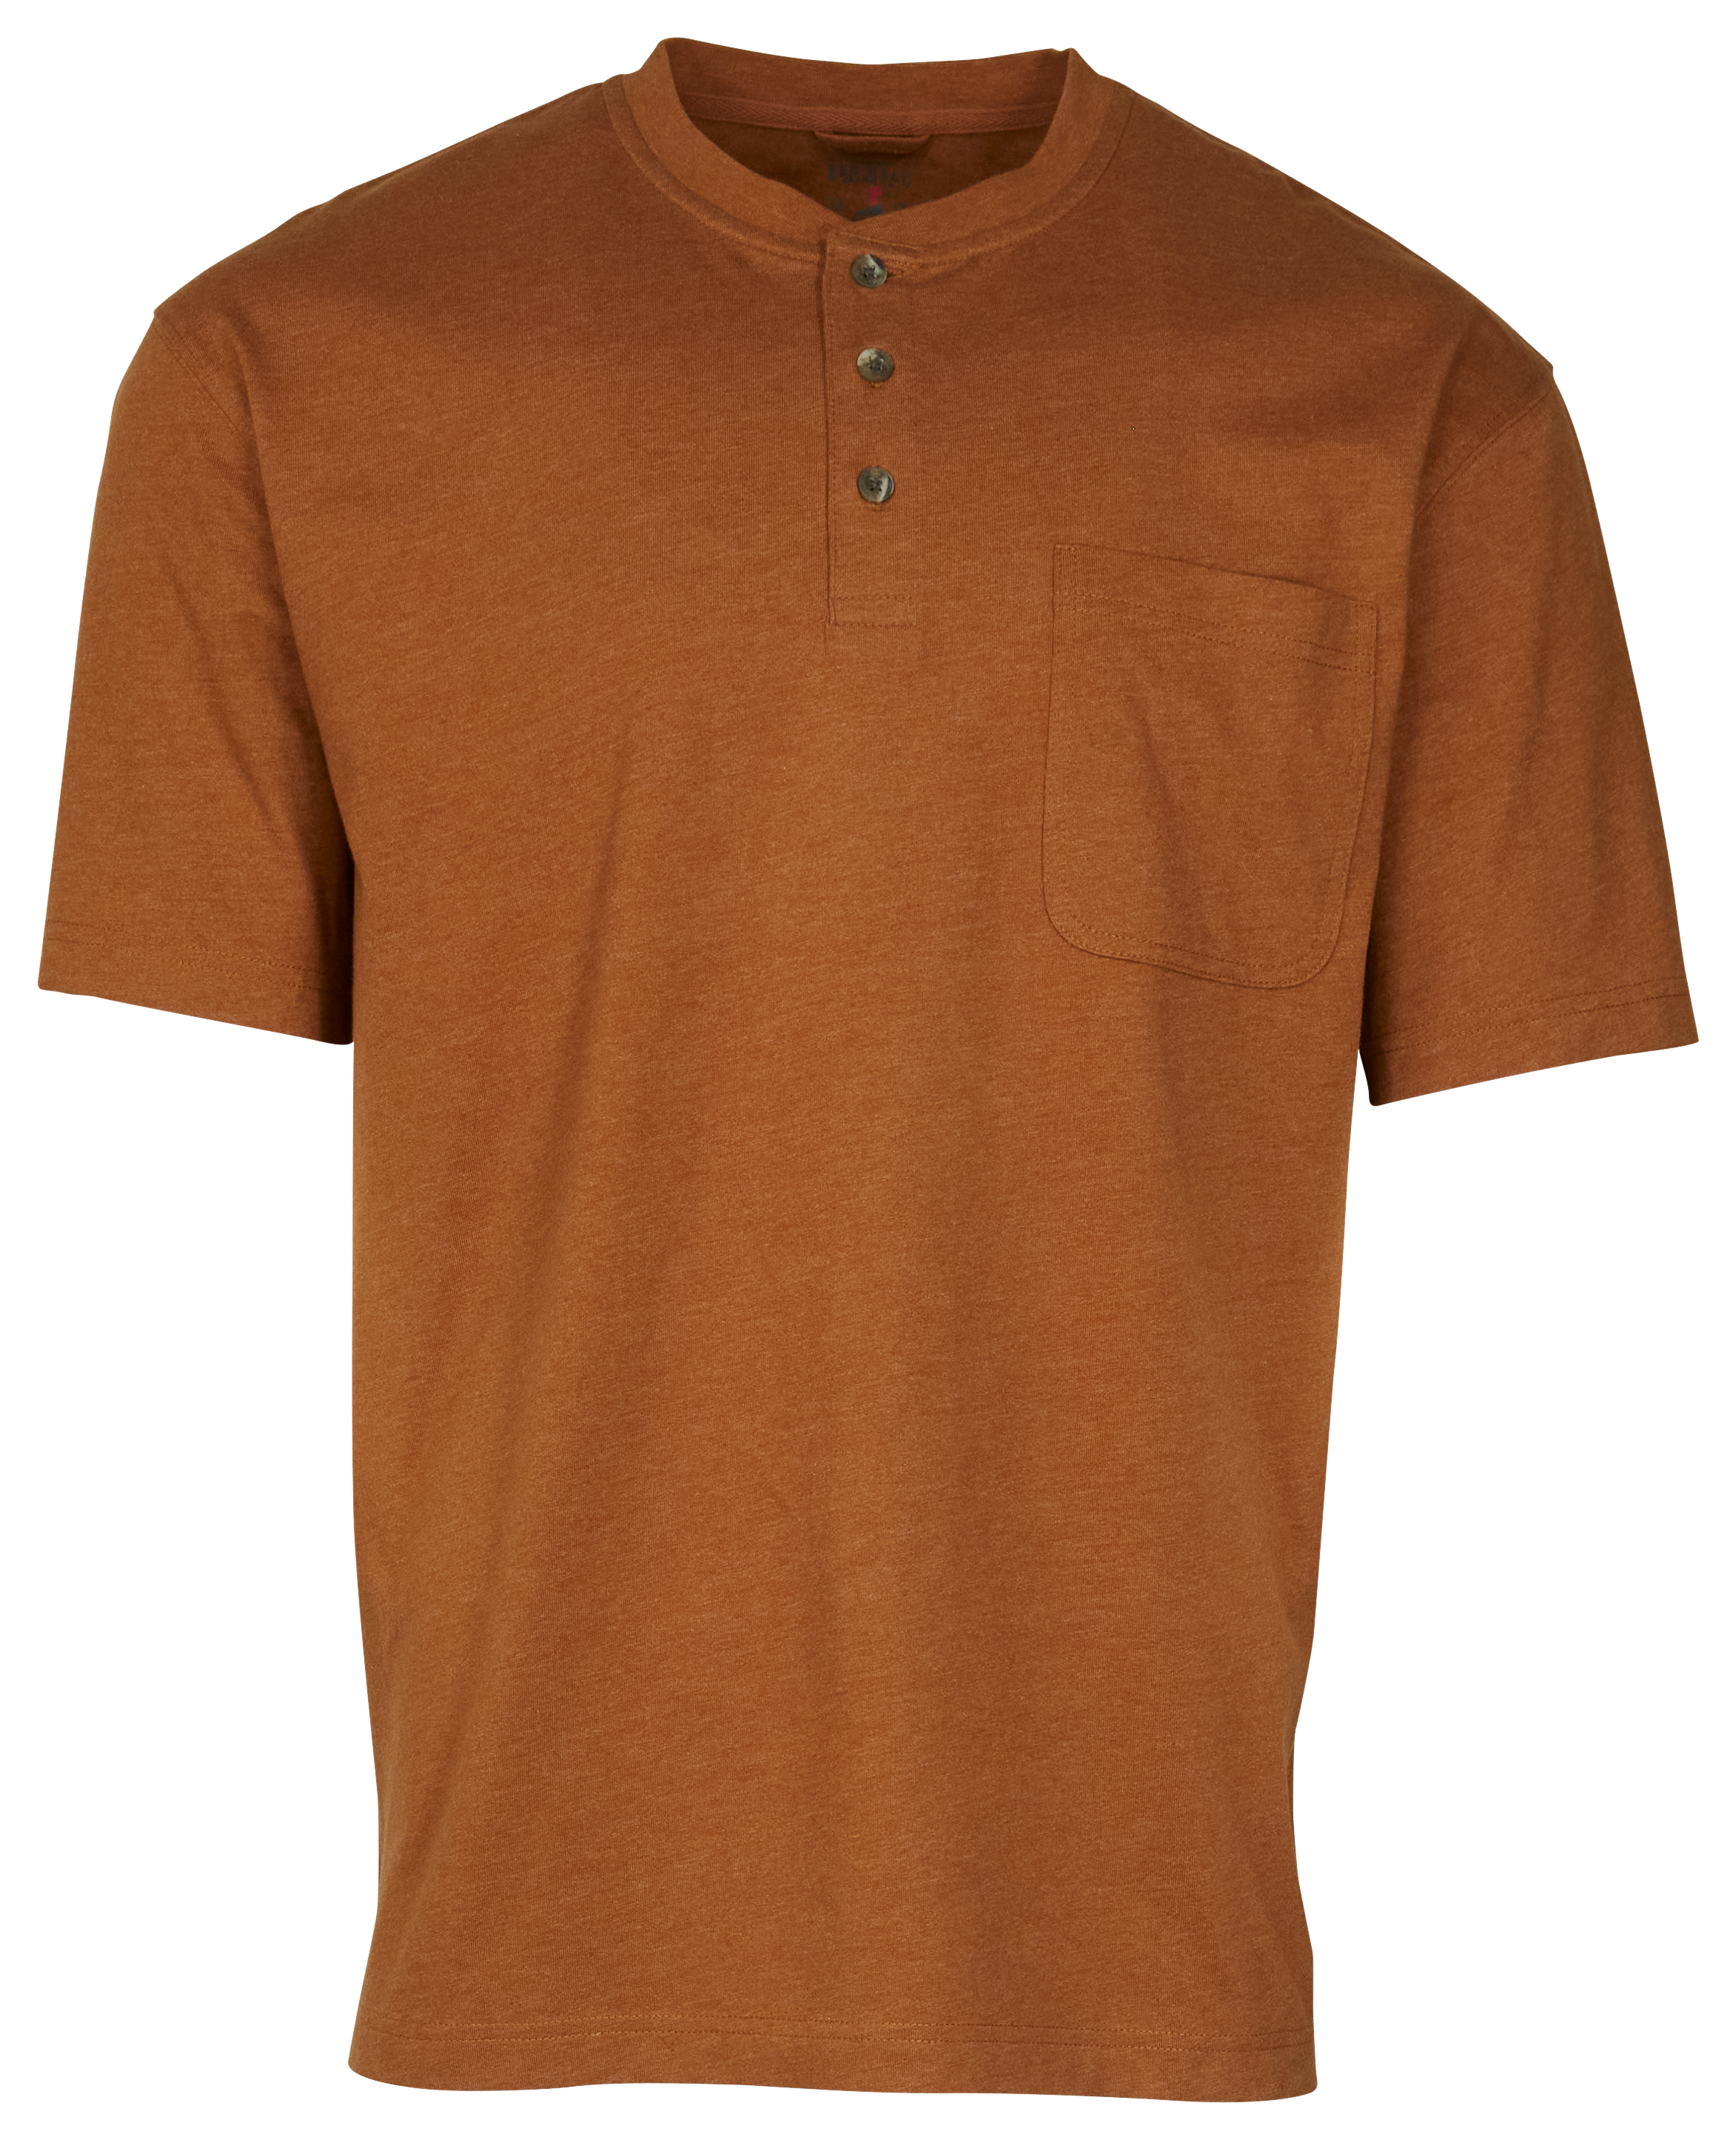 RedHead Henley Pocket Short-Sleeve Shirt for Men - Bronze Heather - 3XLT